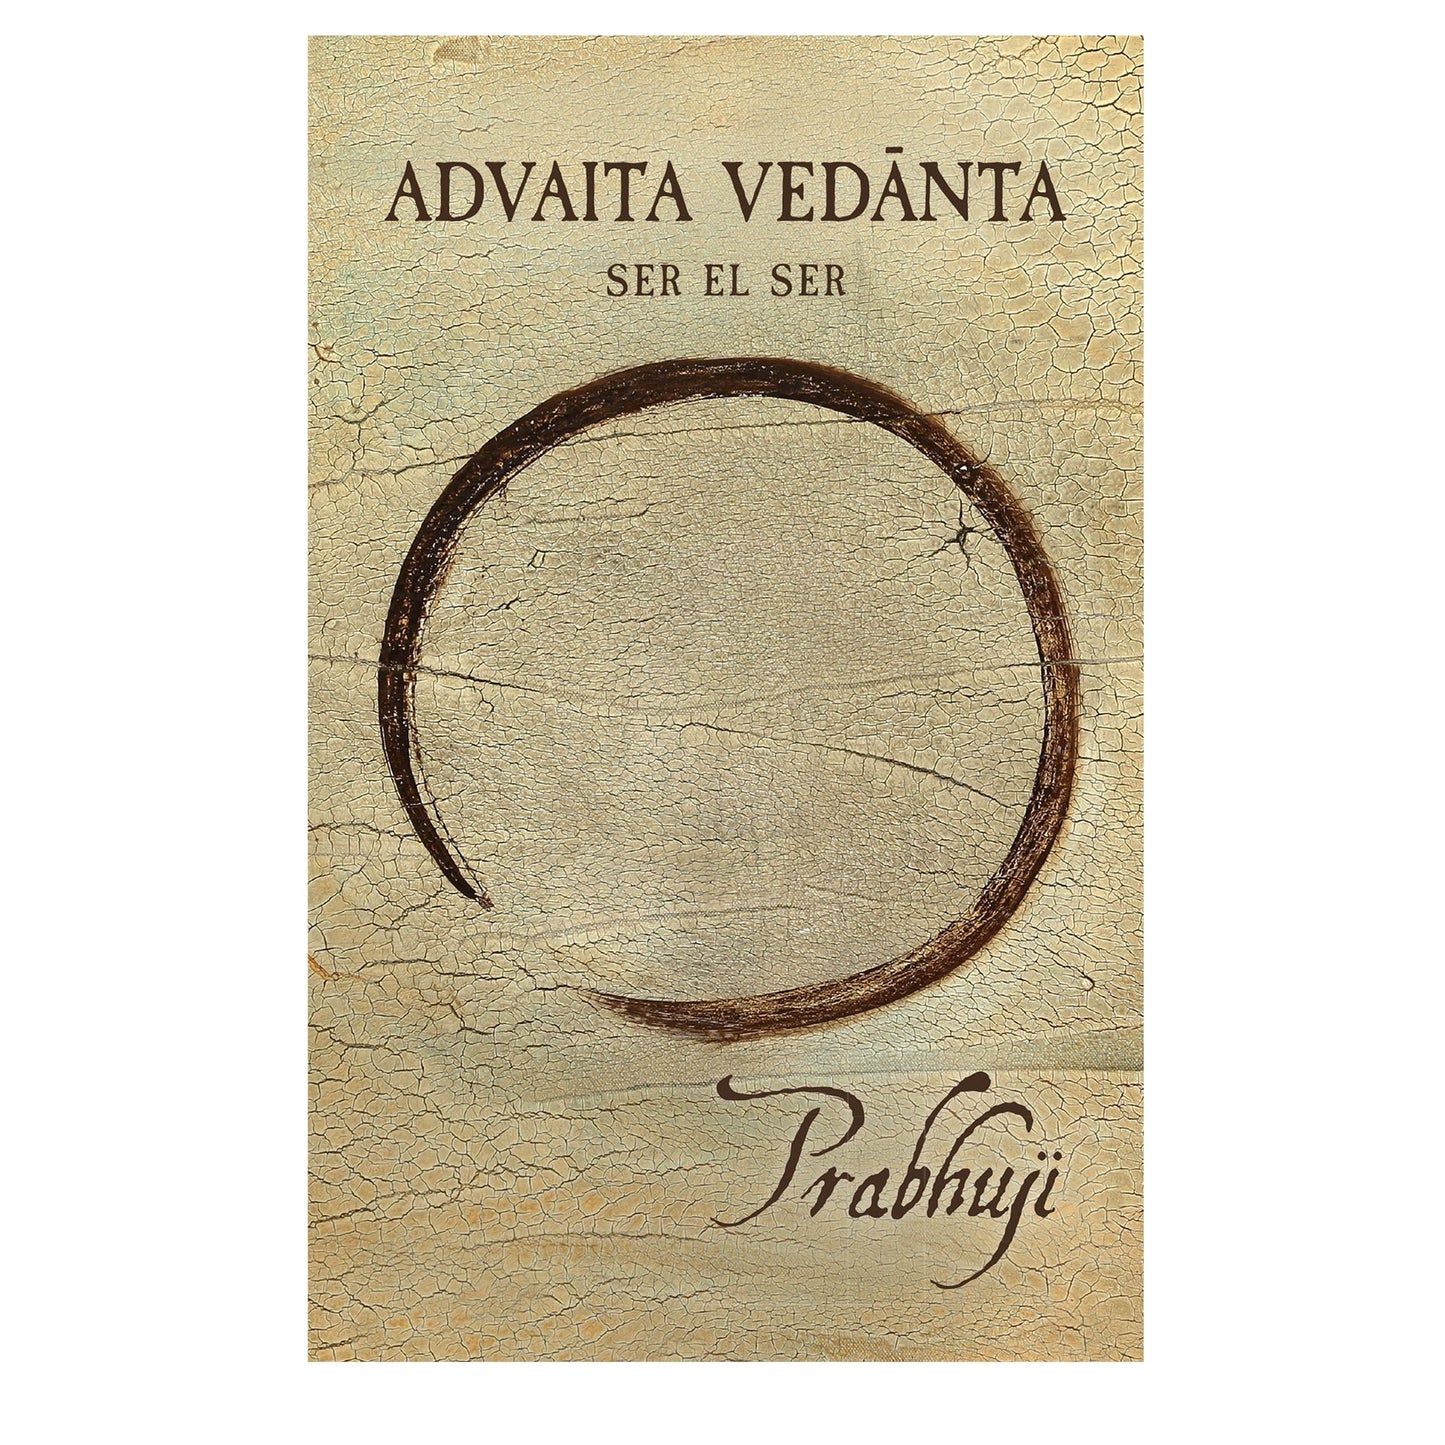 Advaita Vedanta - Ser el ser con Prabhuji (Paperback - Spanish) - Tree Spirit Wellness